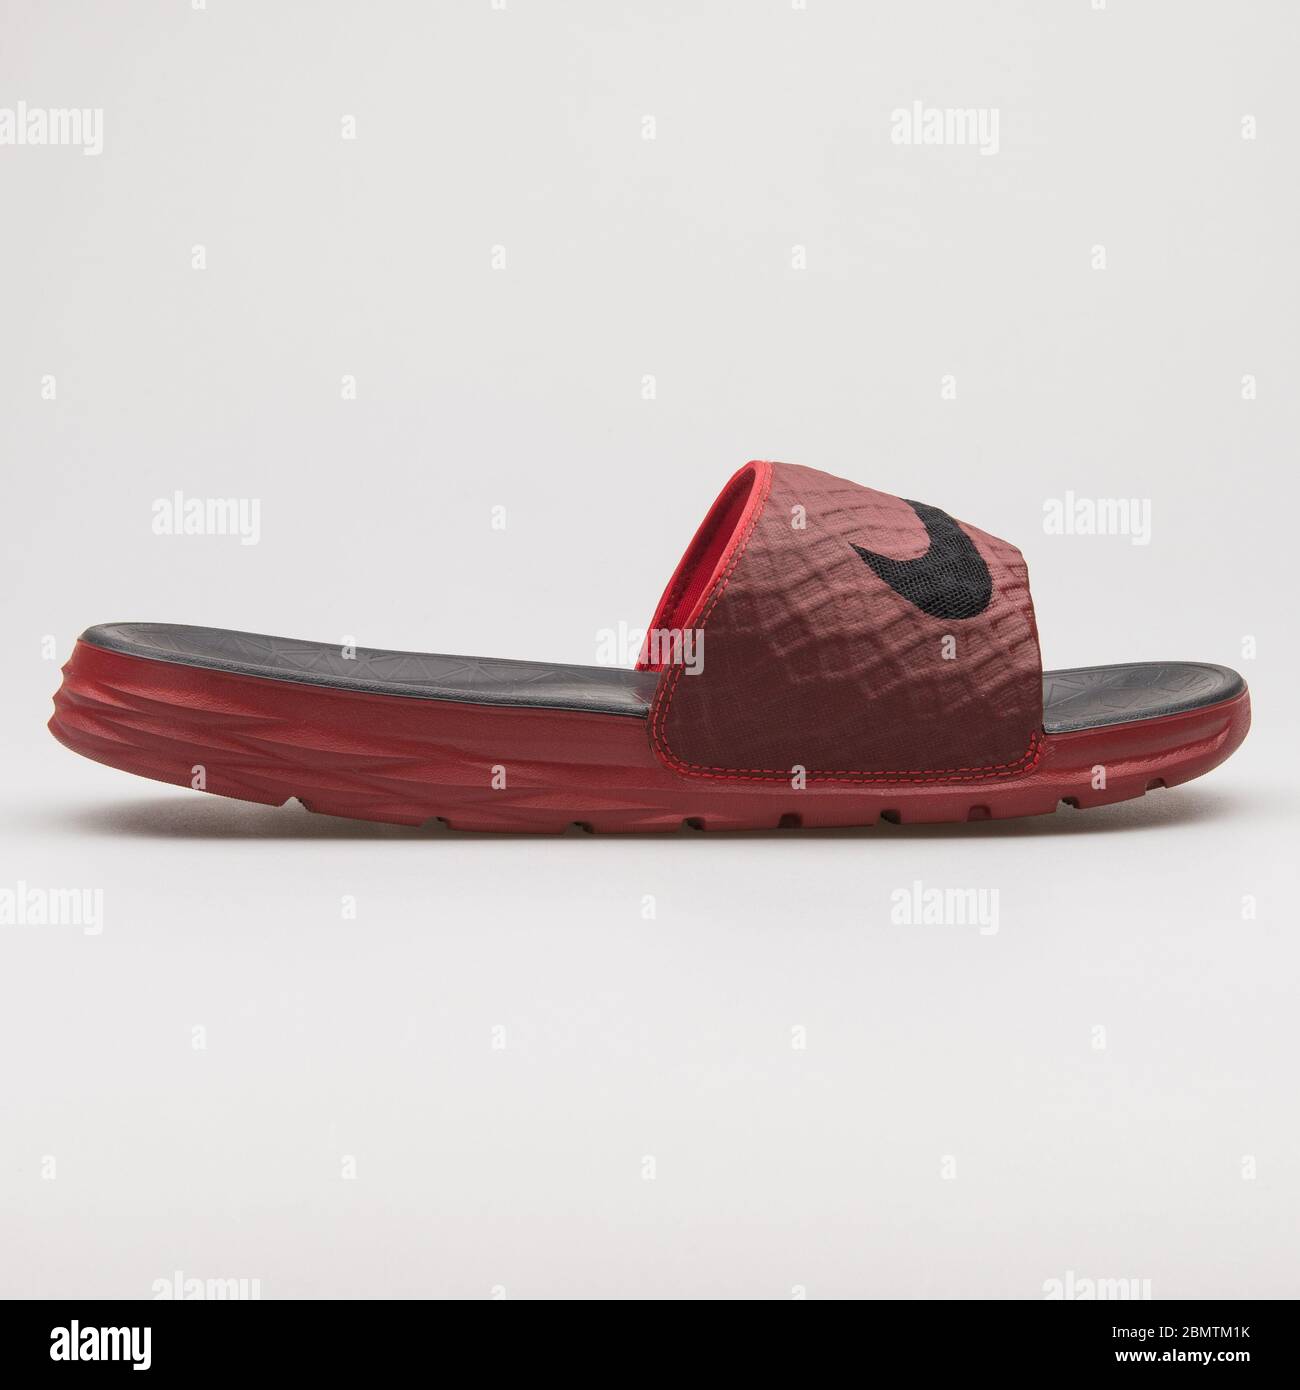 VIENNA, AUSTRIA - FEBRUARY 19, 2018: Nike Benassi Solarsoft red and black  sandal on white background Stock Photo - Alamy